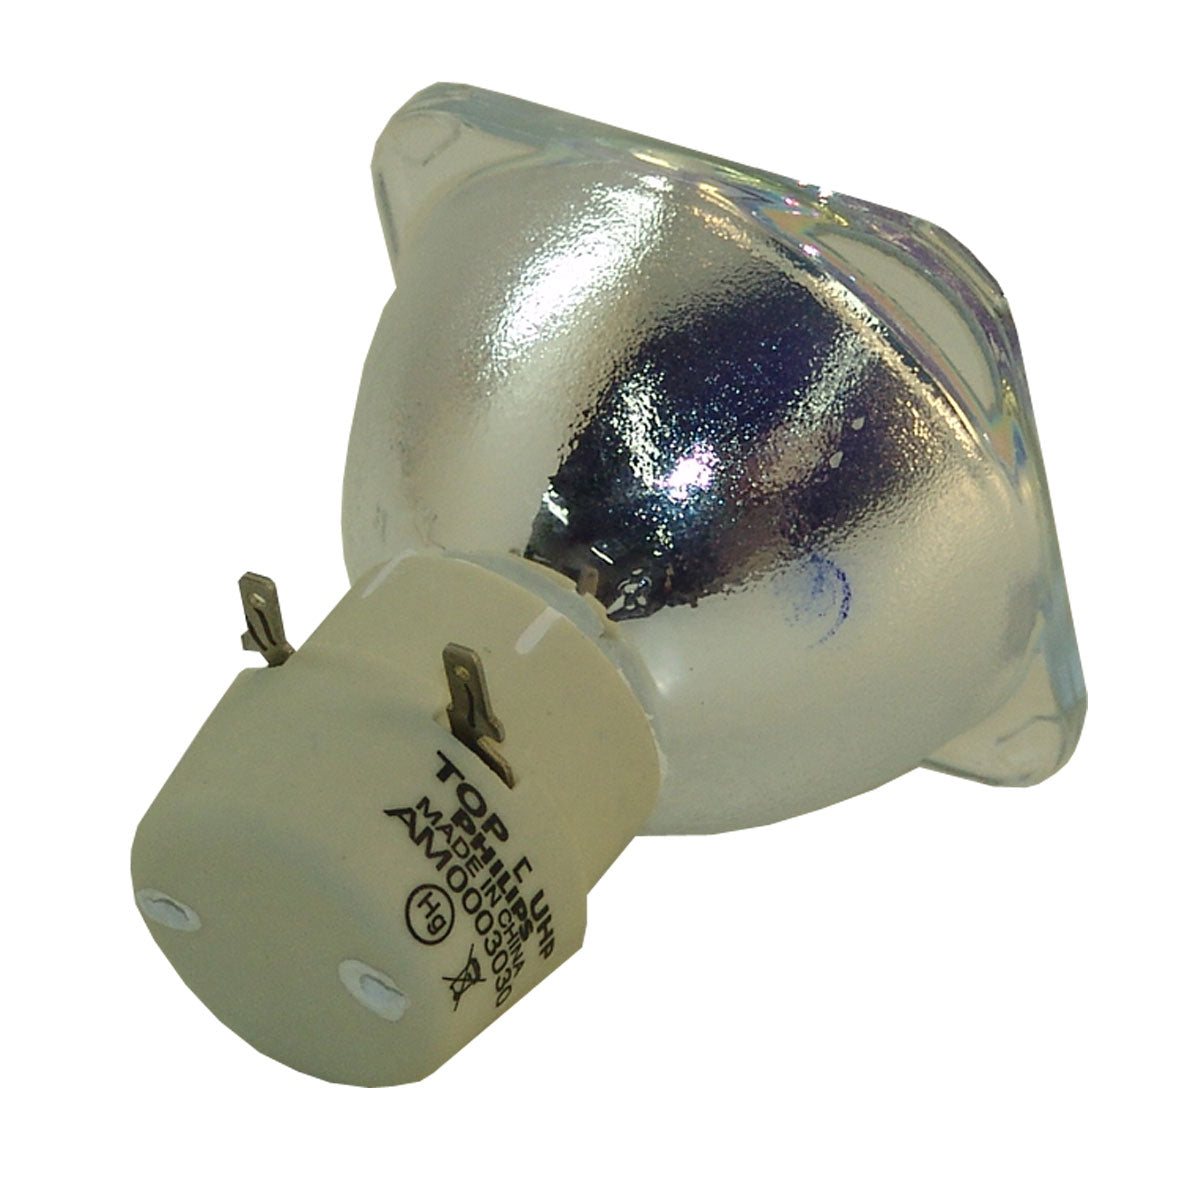 Viewsonic RLC-102 Philips Projector Bare Lamp